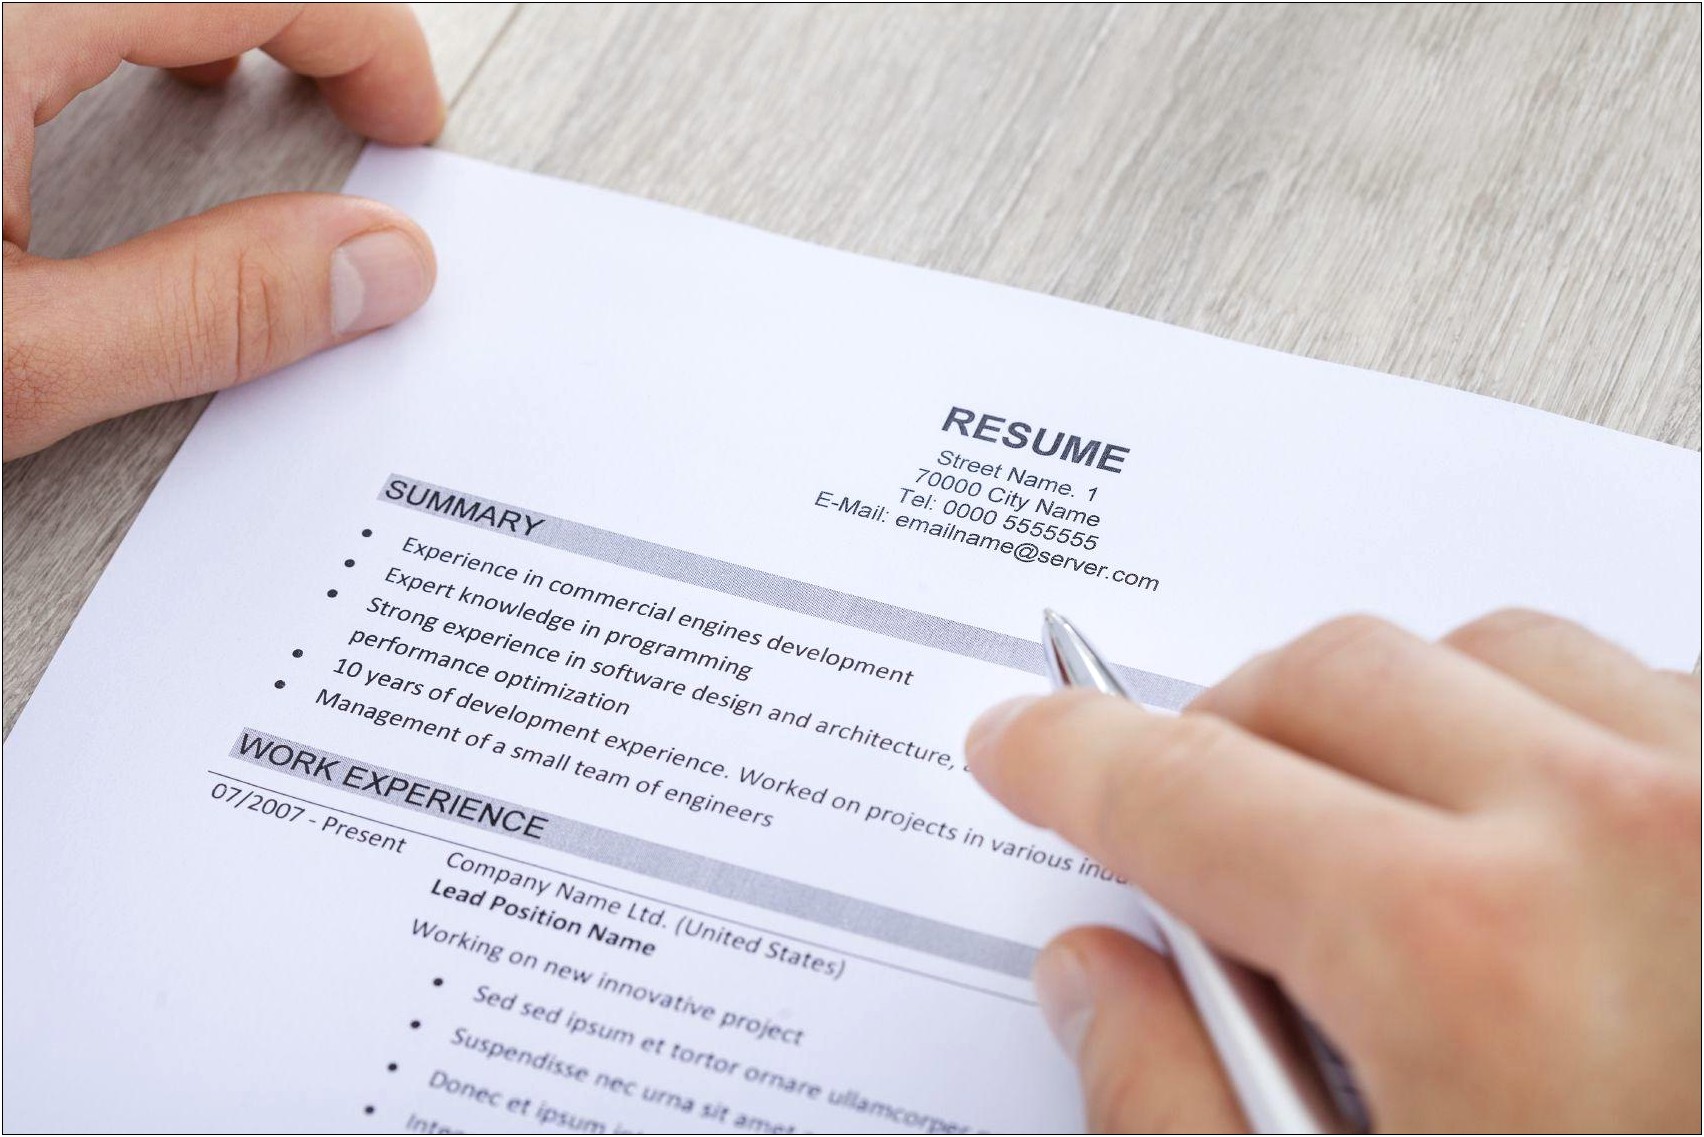 Should You Include Company Description On Resume